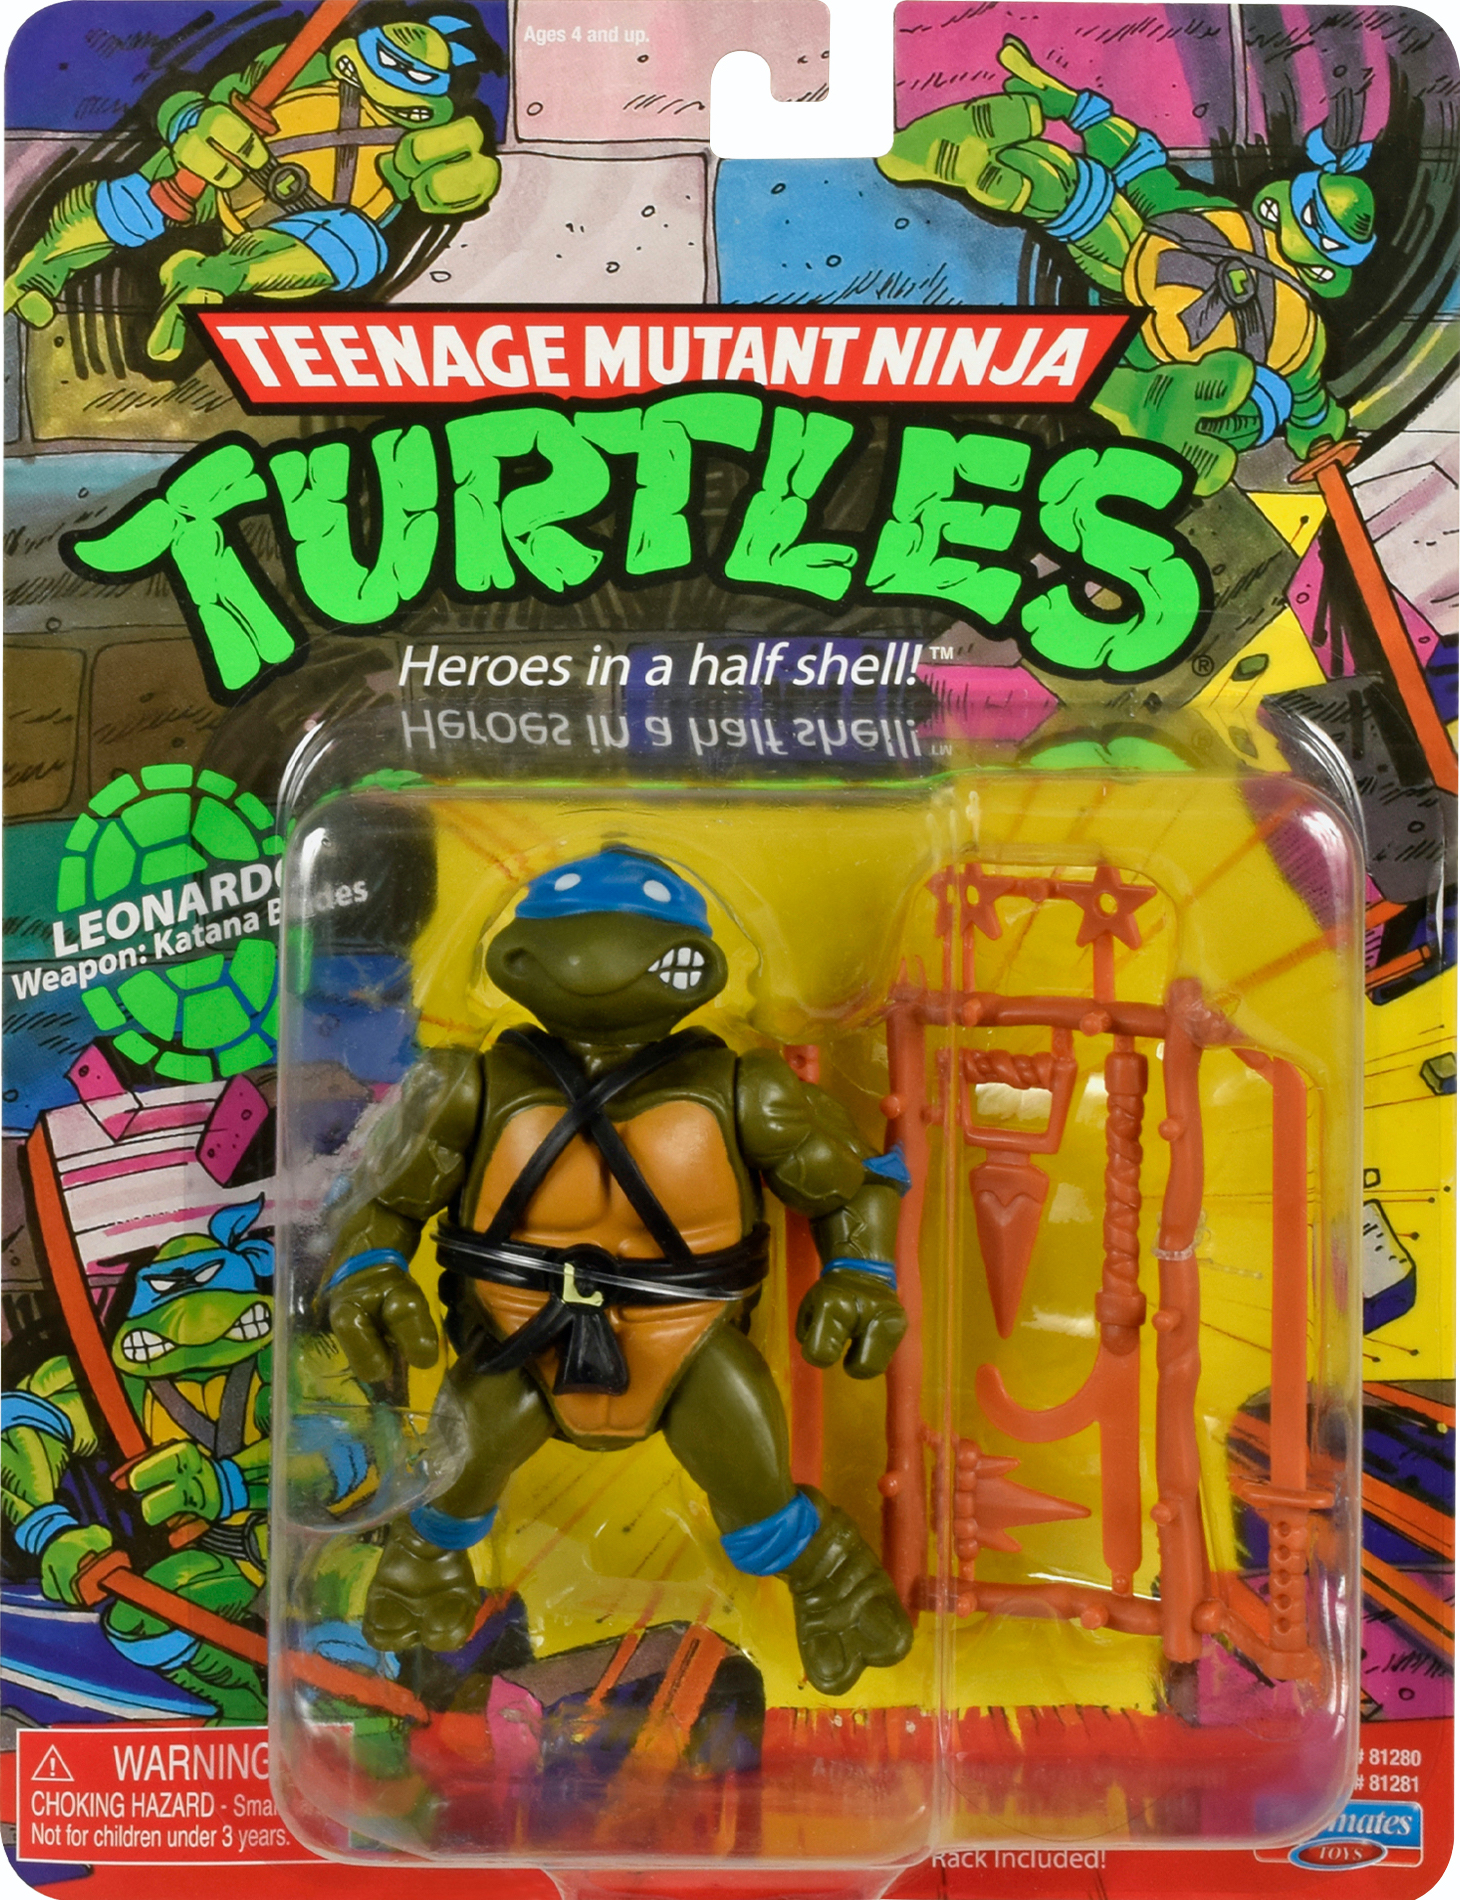 https://www.actionfigure411.com/teenage-mutant-ninja-turtles/images/leonardo-classic-basic-2892.jpg